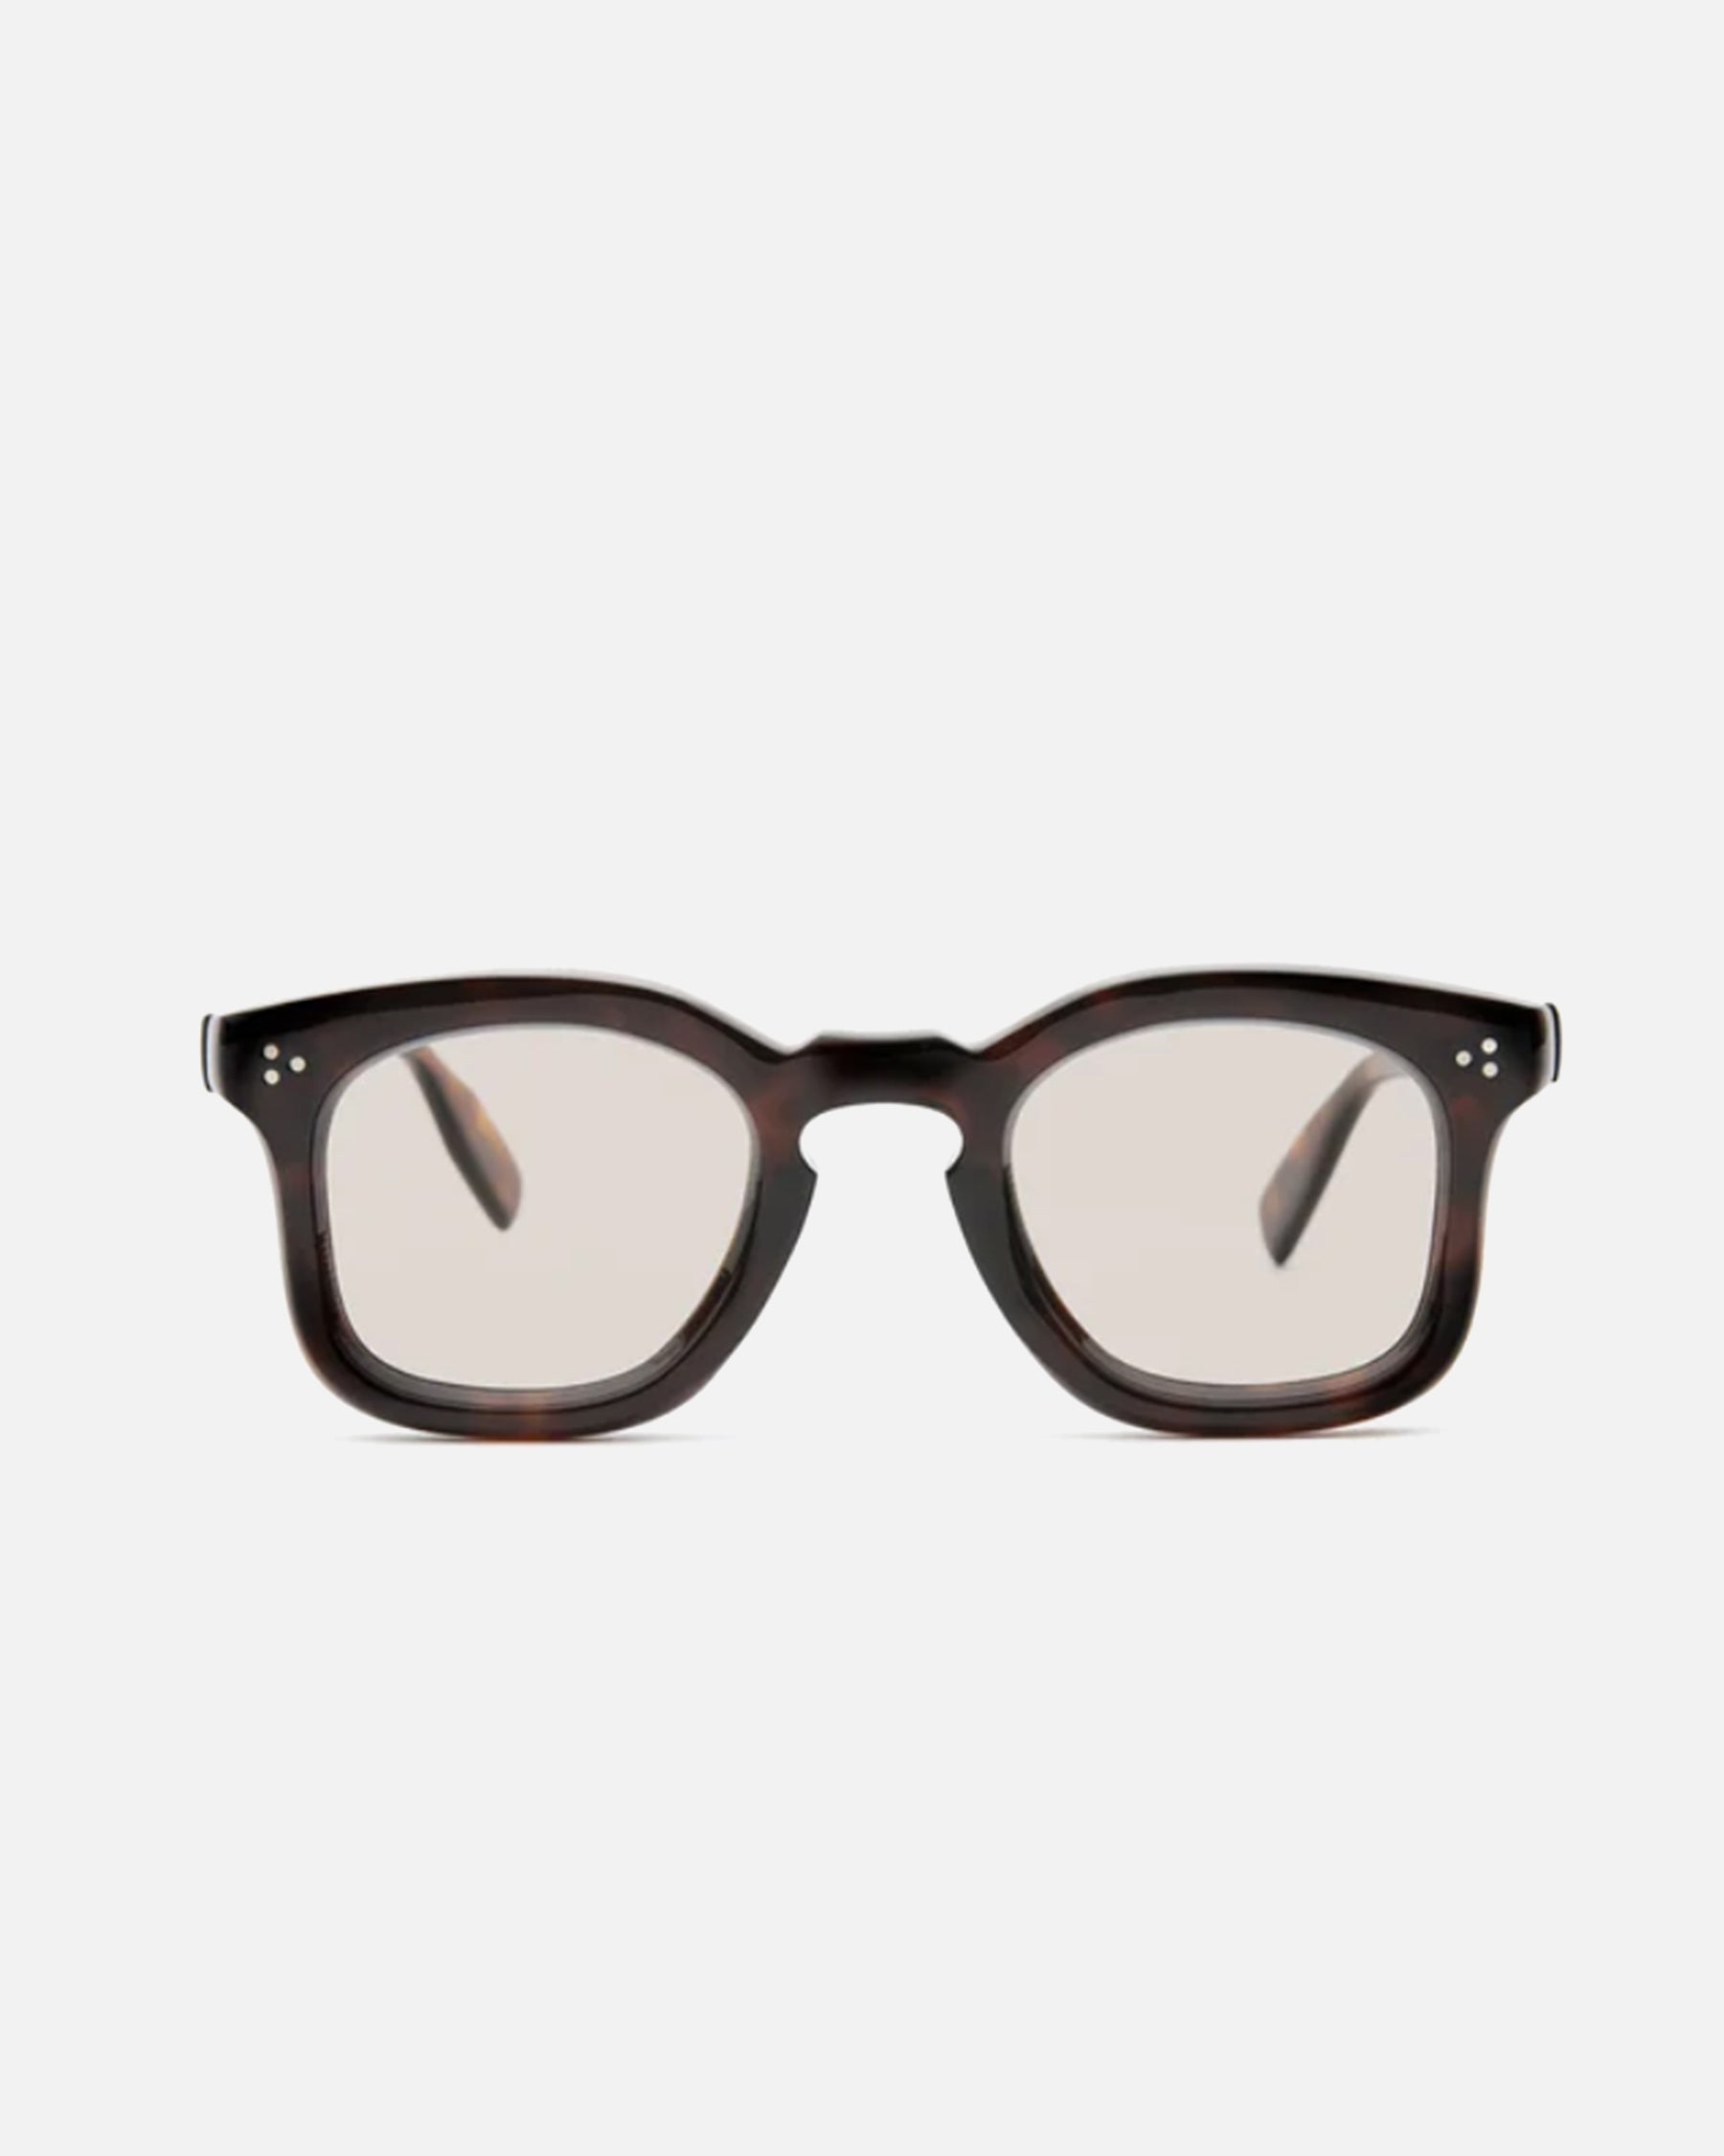 gp-17 Sunglasses ecaille / Lens: Brown